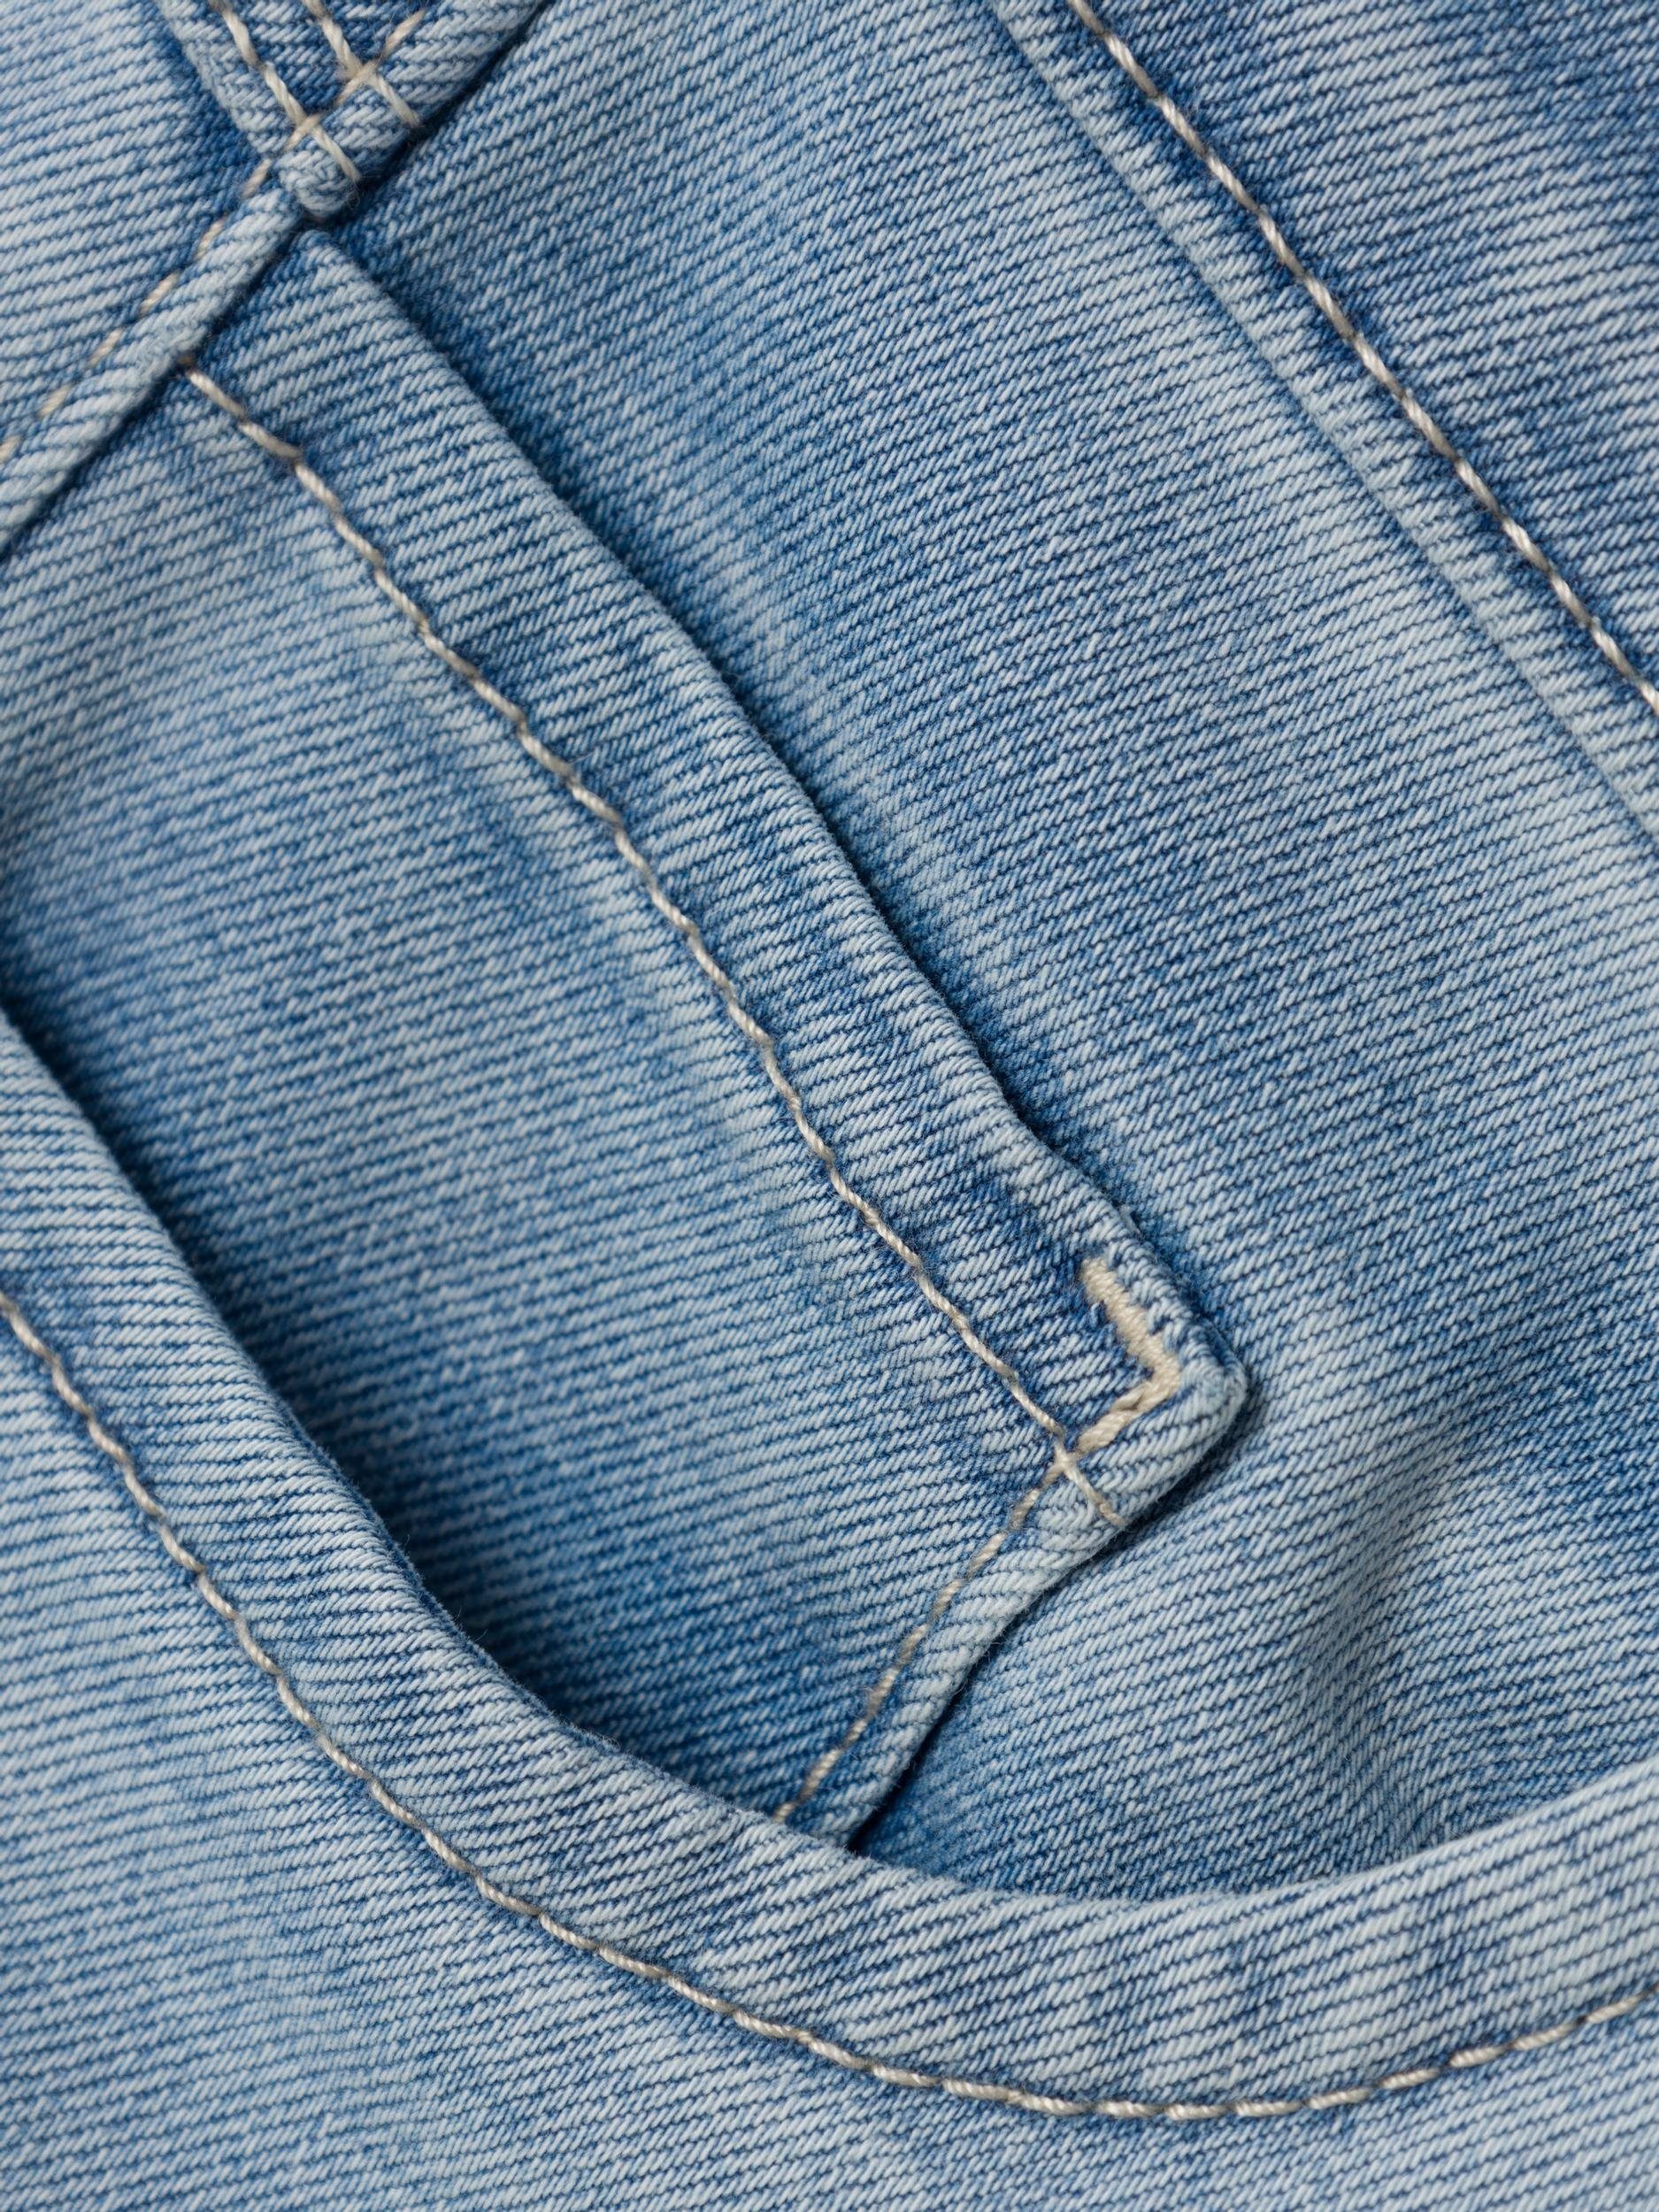 1356-ON WIDE NKFROSE NOOS Jeans Blue Denim HW Weite Light JEANS It Name